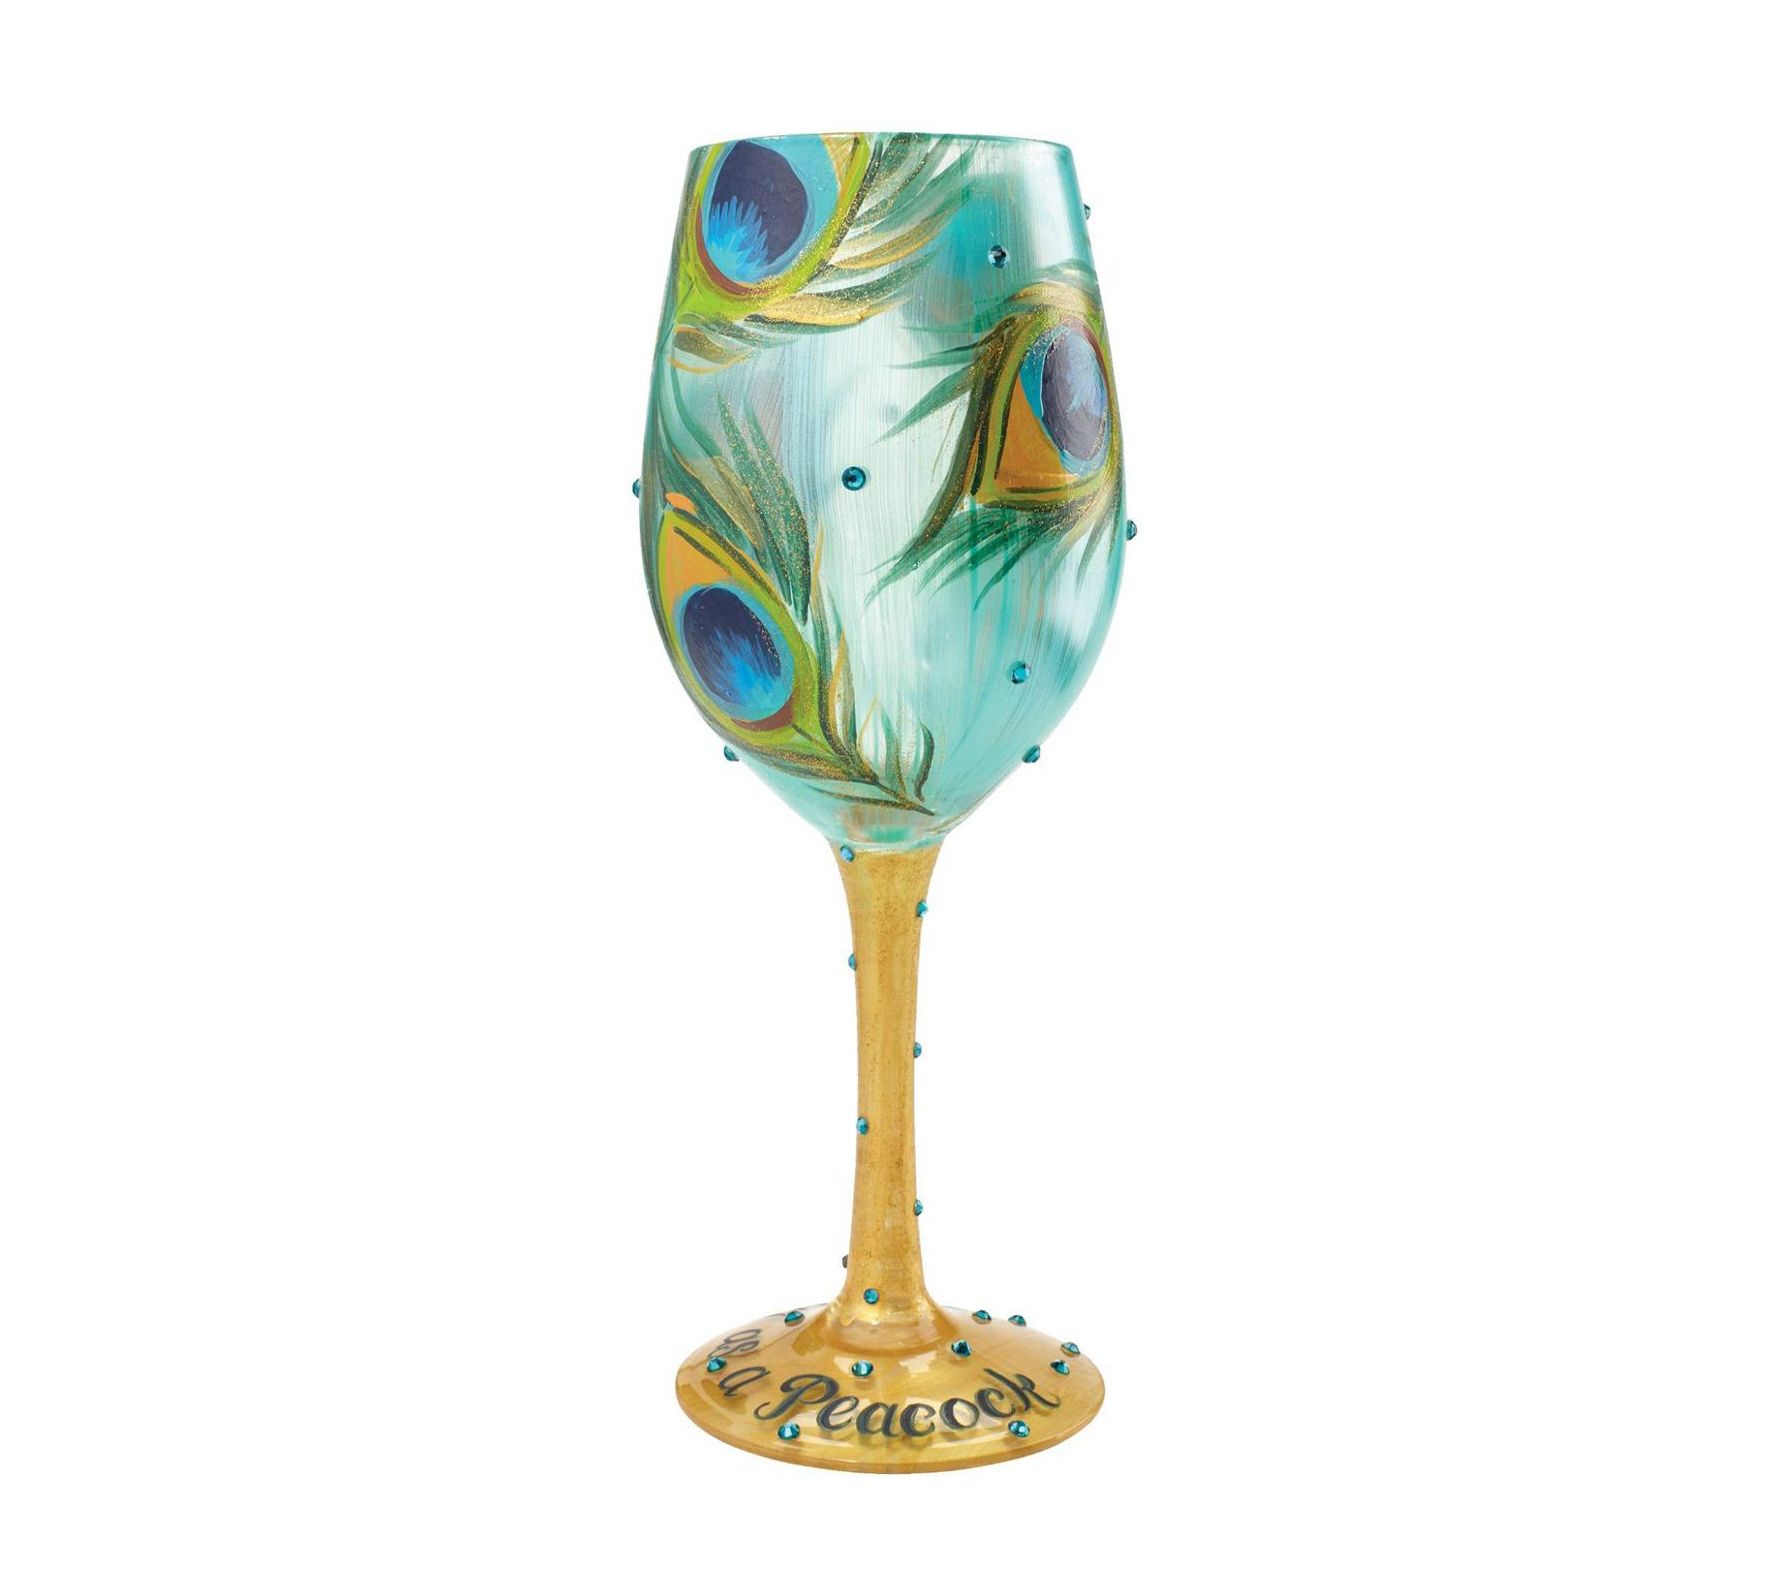 Peacock stemless wine glass, 17 oz. 